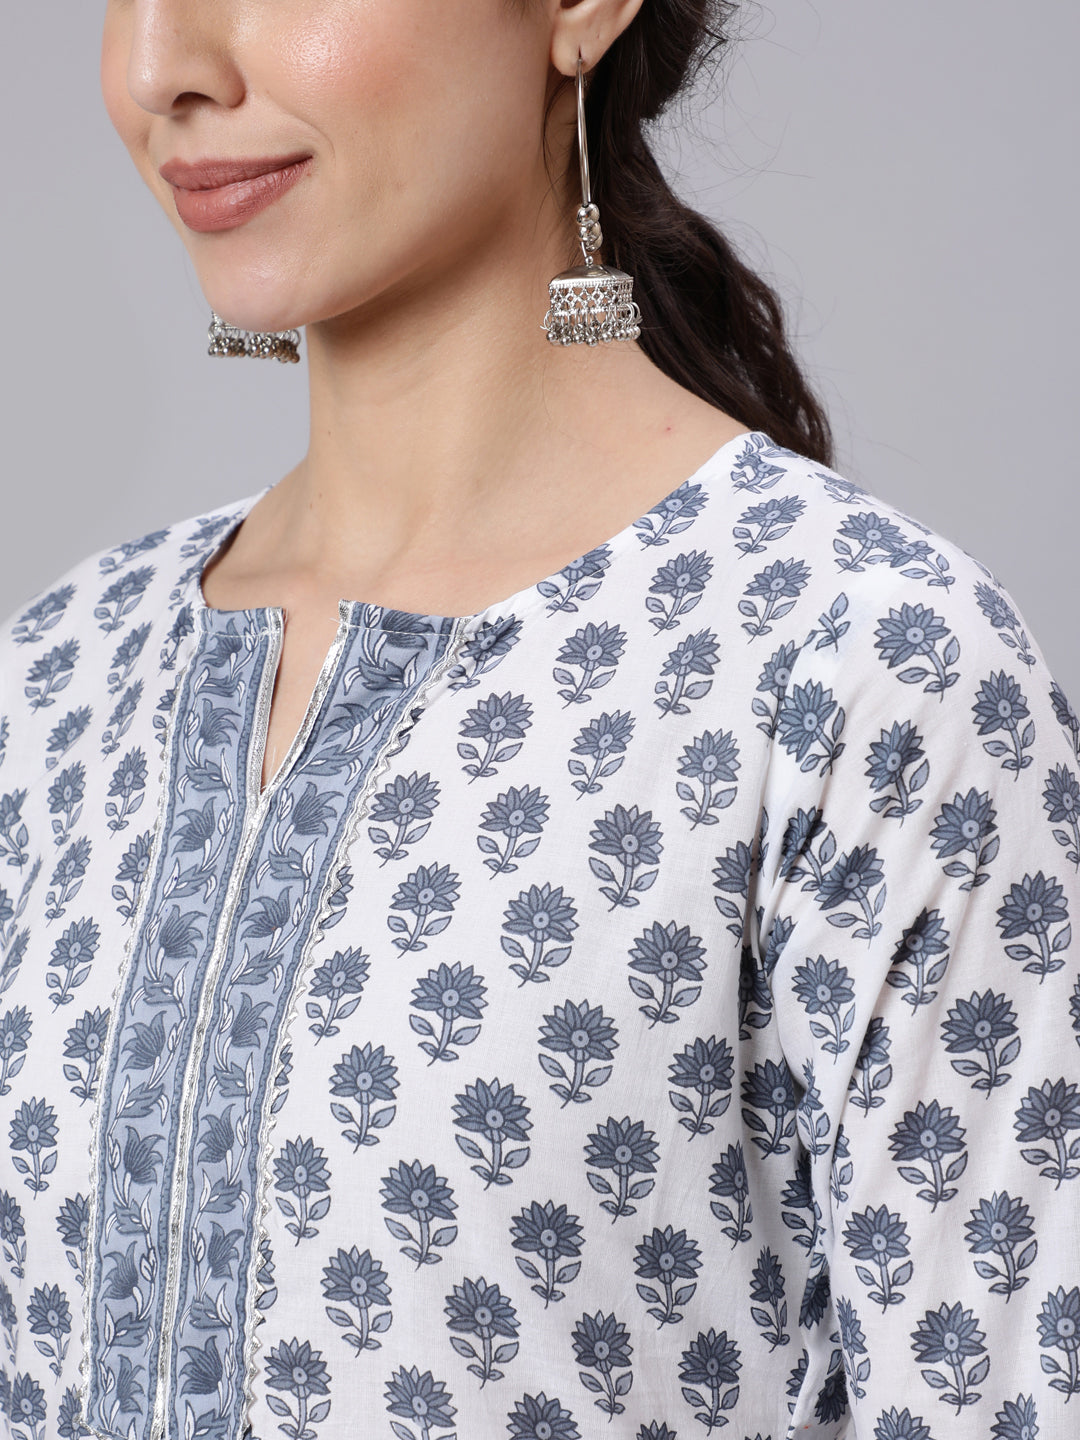 Women's Off-White Printed Straight Kurta With Three Quarter Sleeves - Nayo Clothing